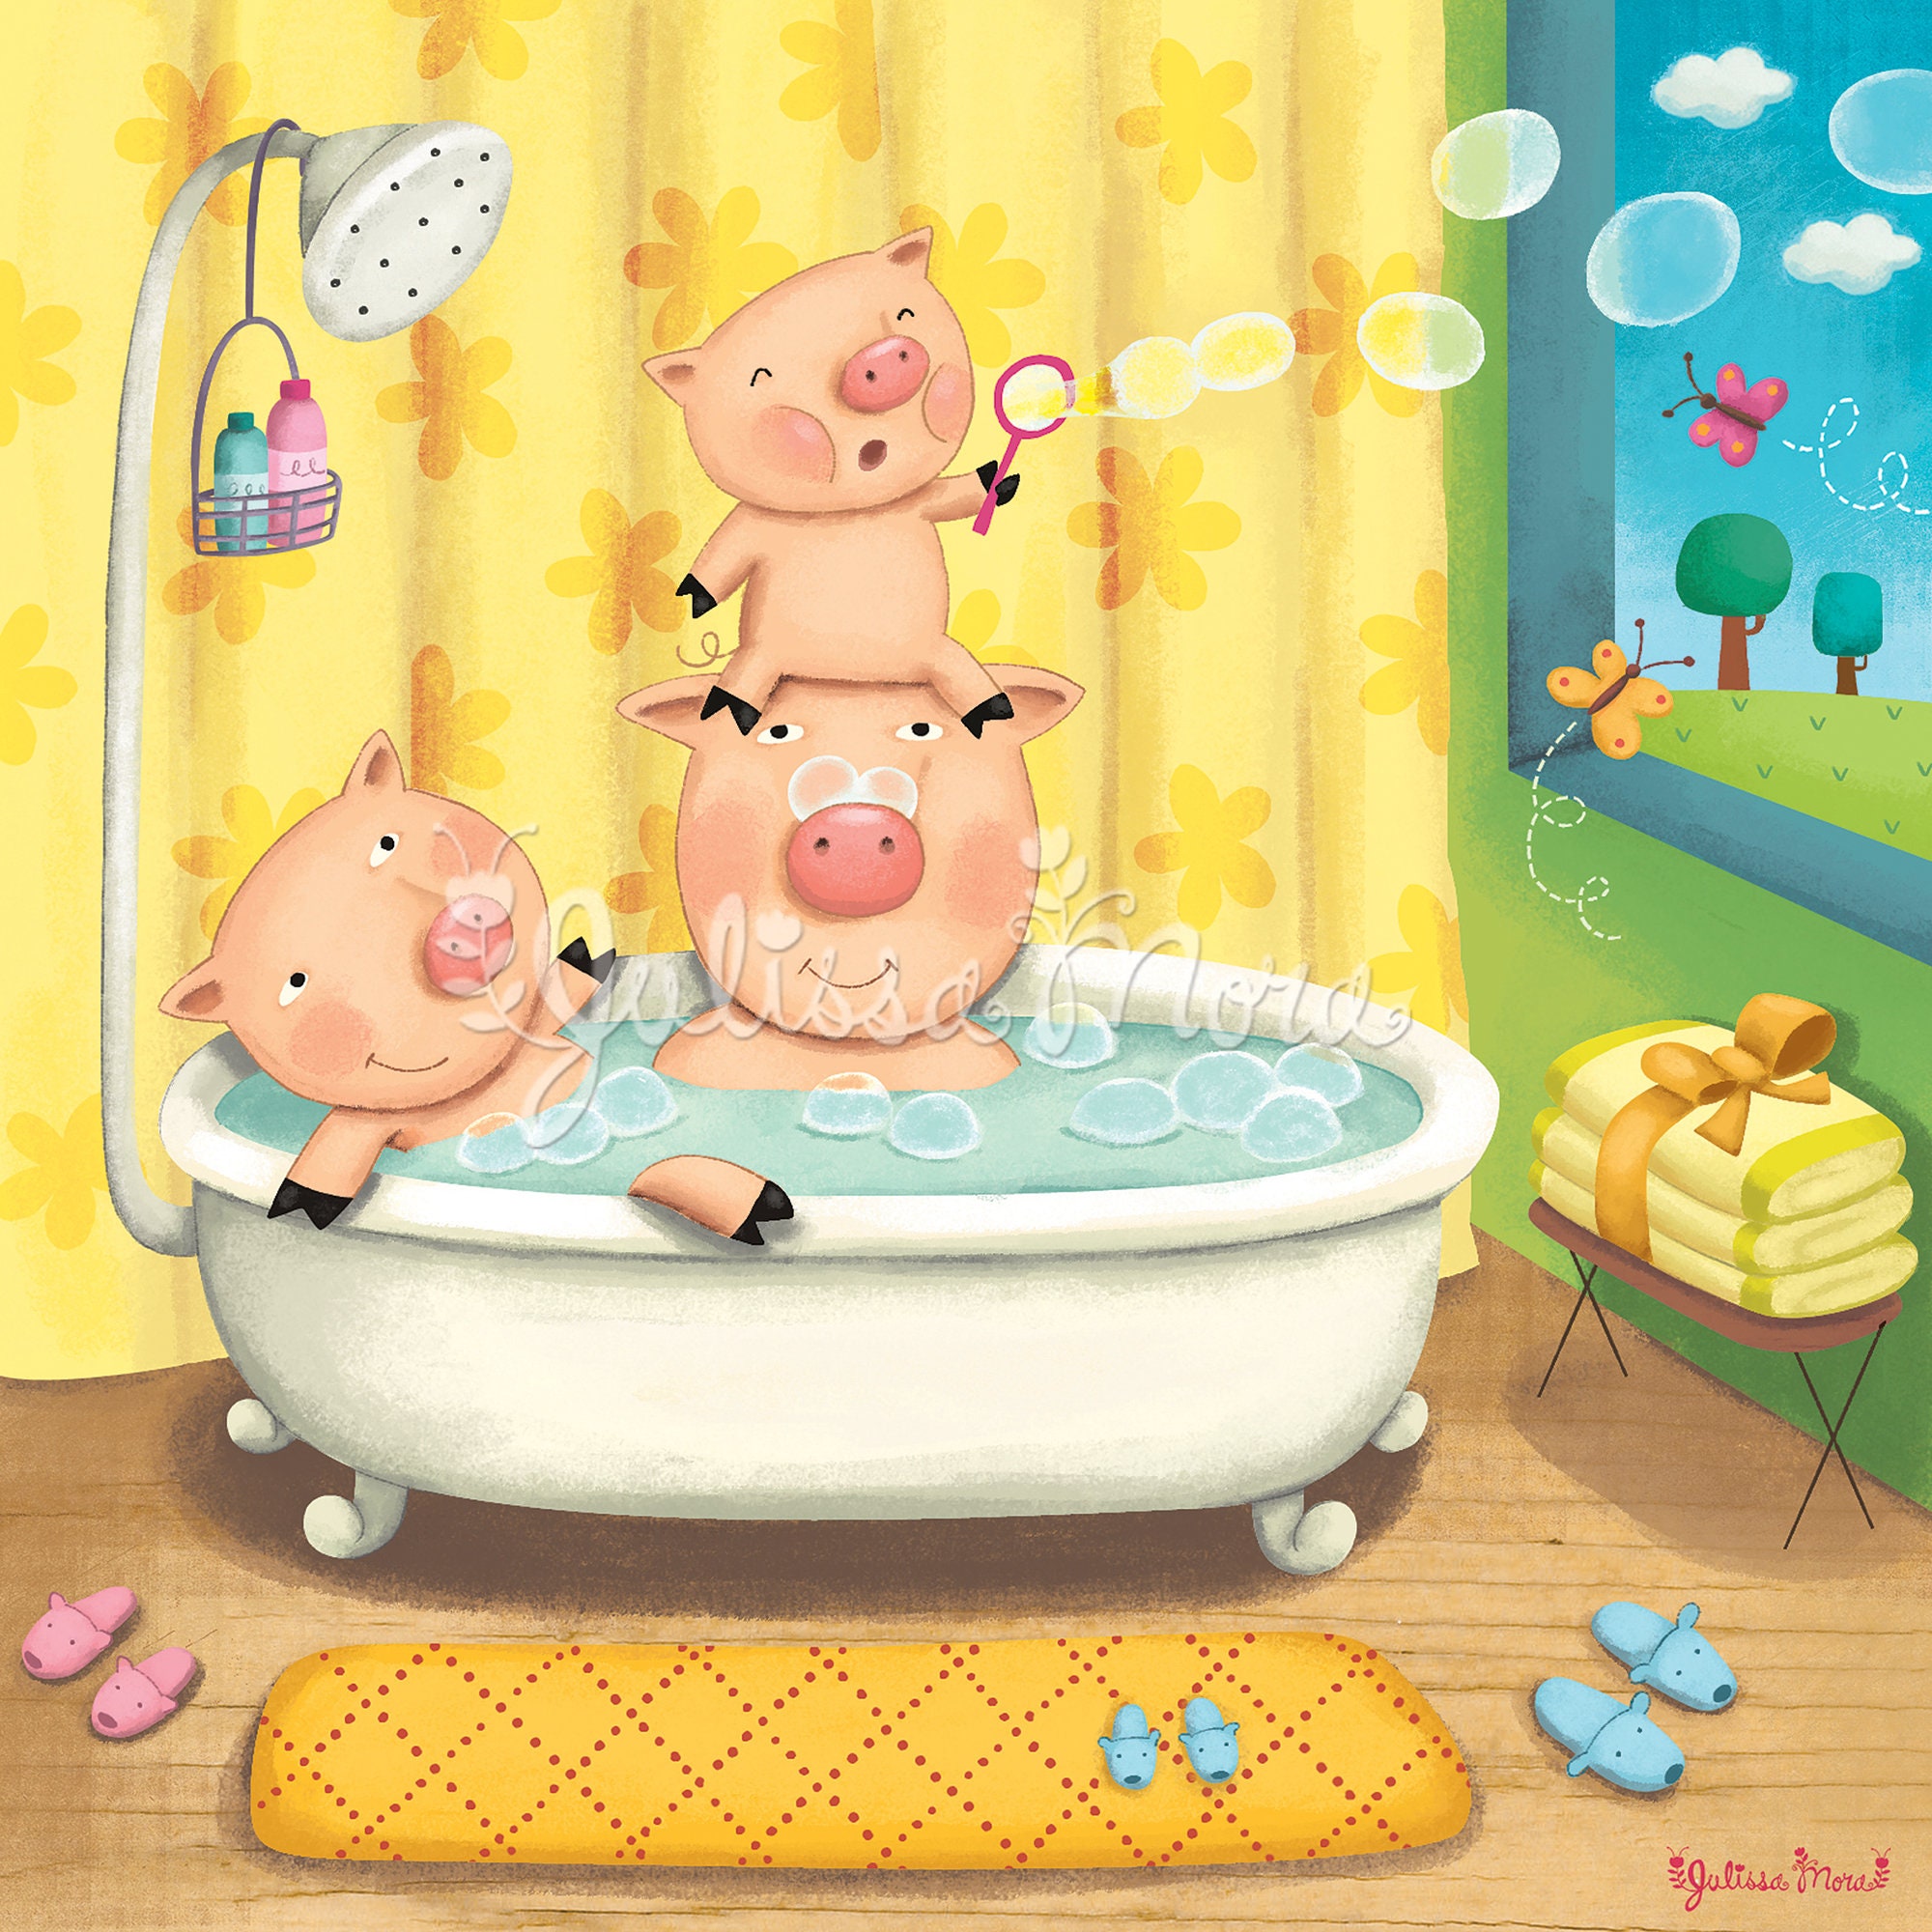 Bathroom Art Pigs Print Whimsical Nursery Bath time Printable Kids Pigs decor Neutral Nursery Art Kids Art Gender Neutral Nursery